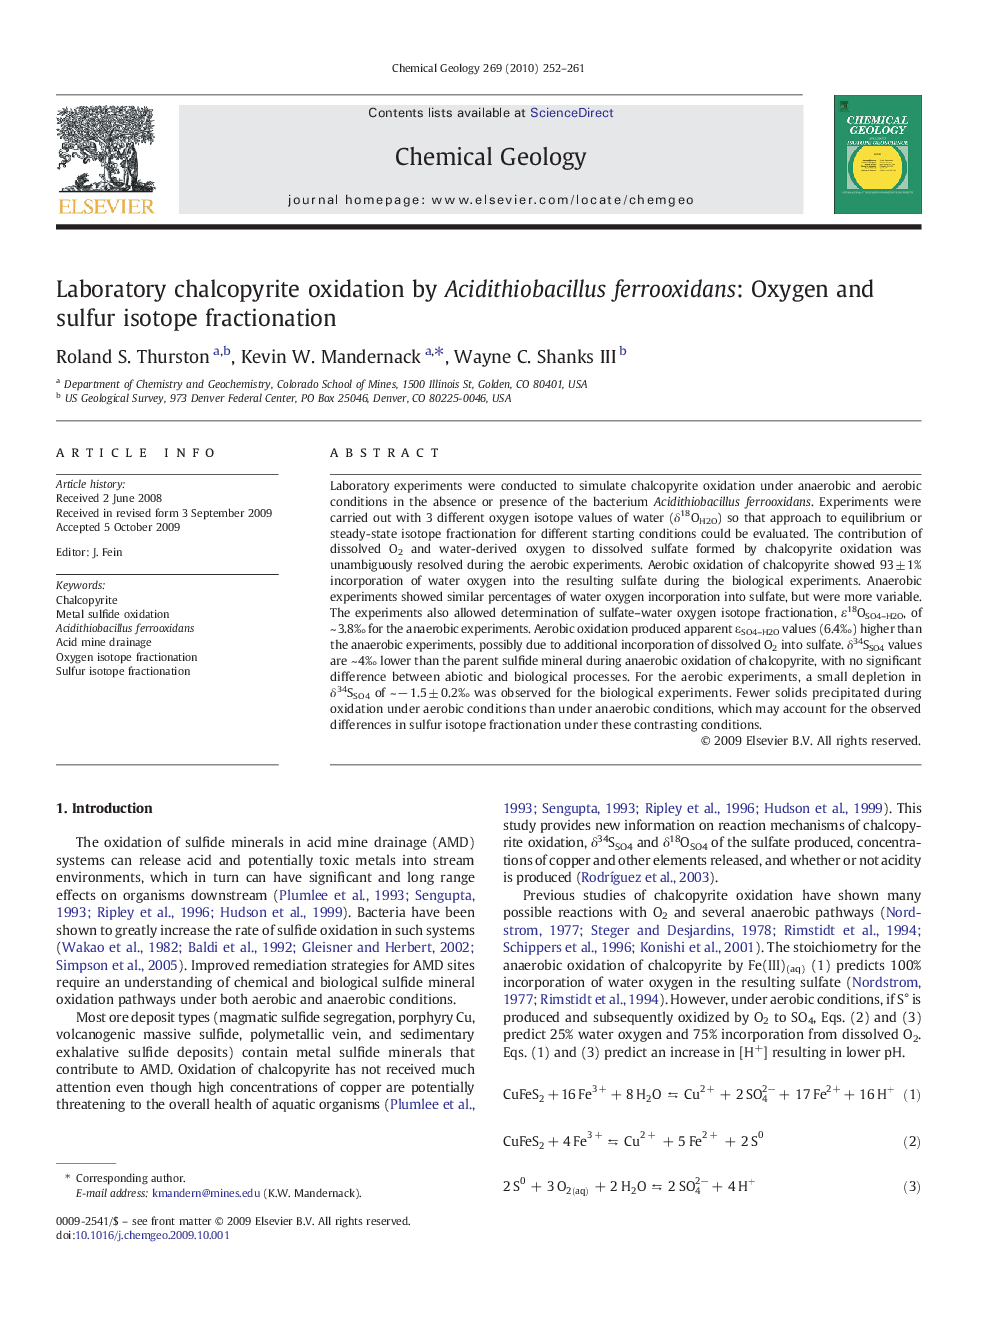 Laboratory chalcopyrite oxidation by Acidithiobacillus ferrooxidans: Oxygen and sulfur isotope fractionation